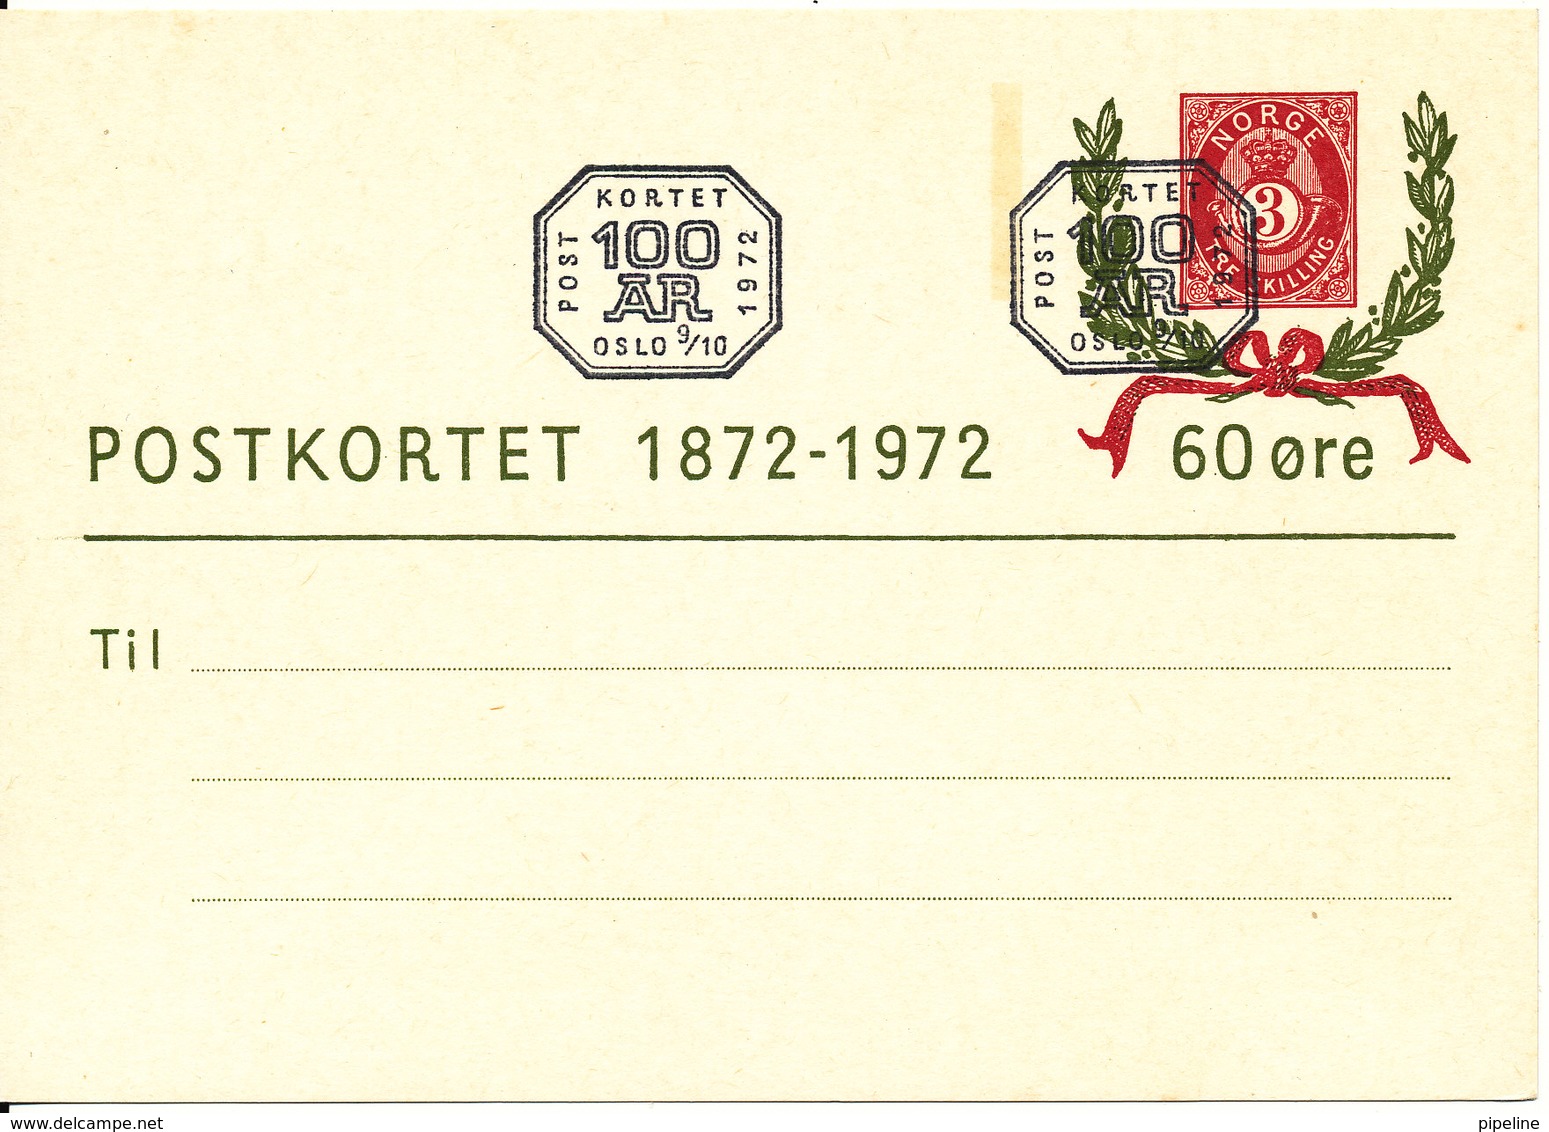 Norway FDC 9-10-1972 Postcard Postal Stationery ( Postkortet 1872 - 1972 60 öre) - Covers & Documents